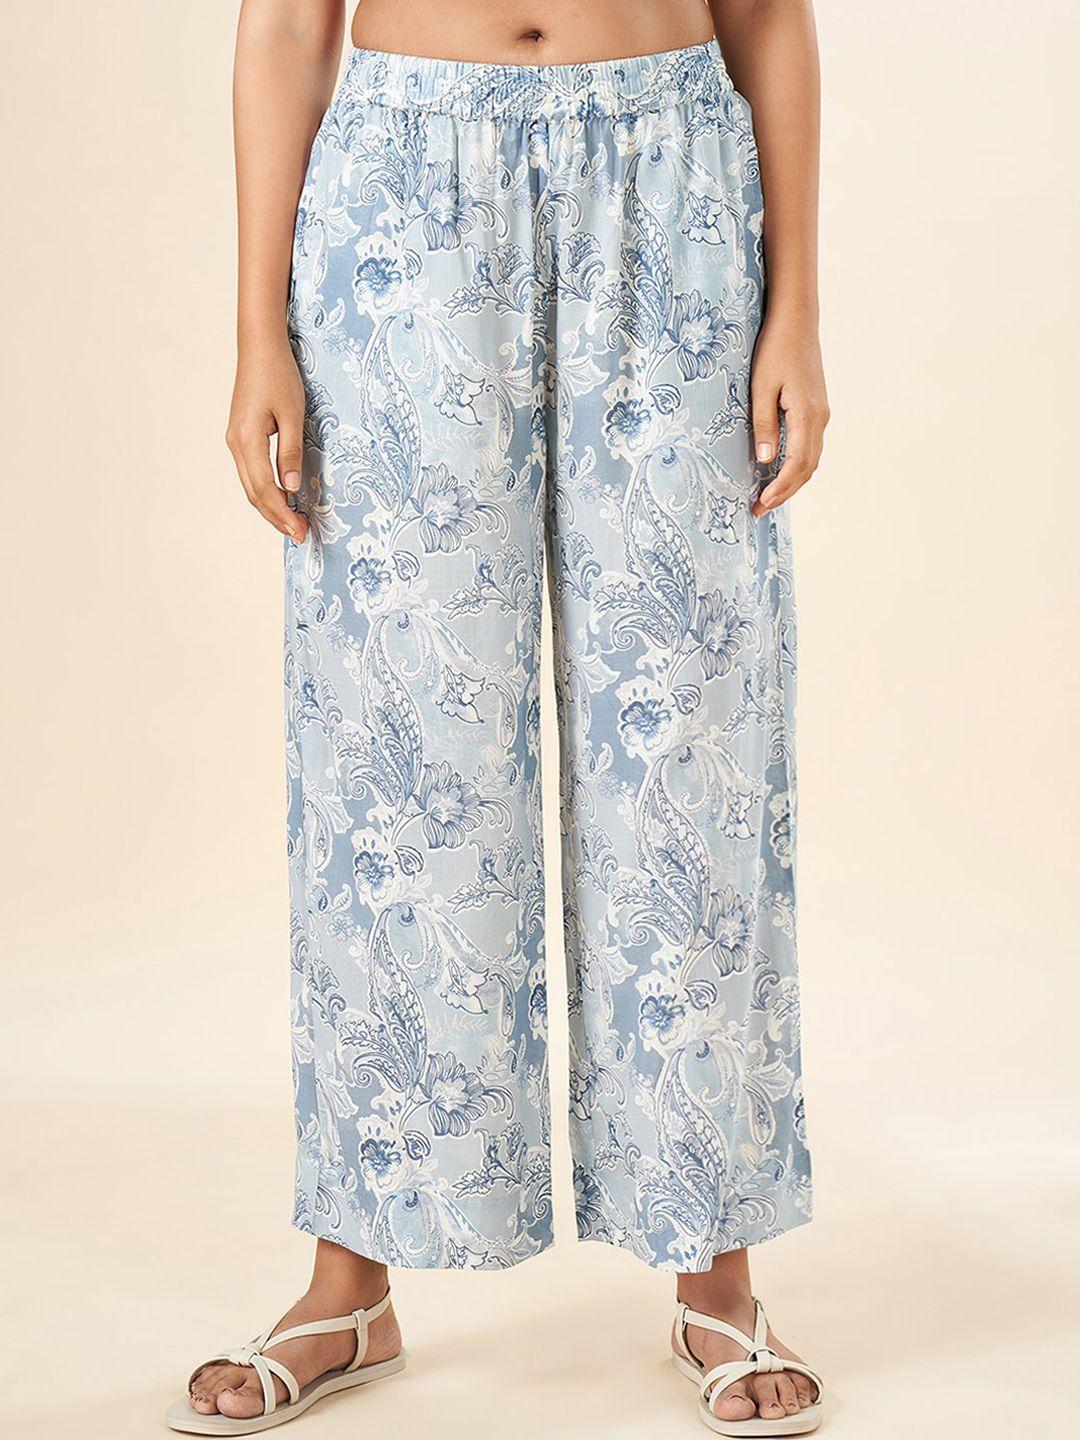 akkriti by pantaloons women floral printed trousers